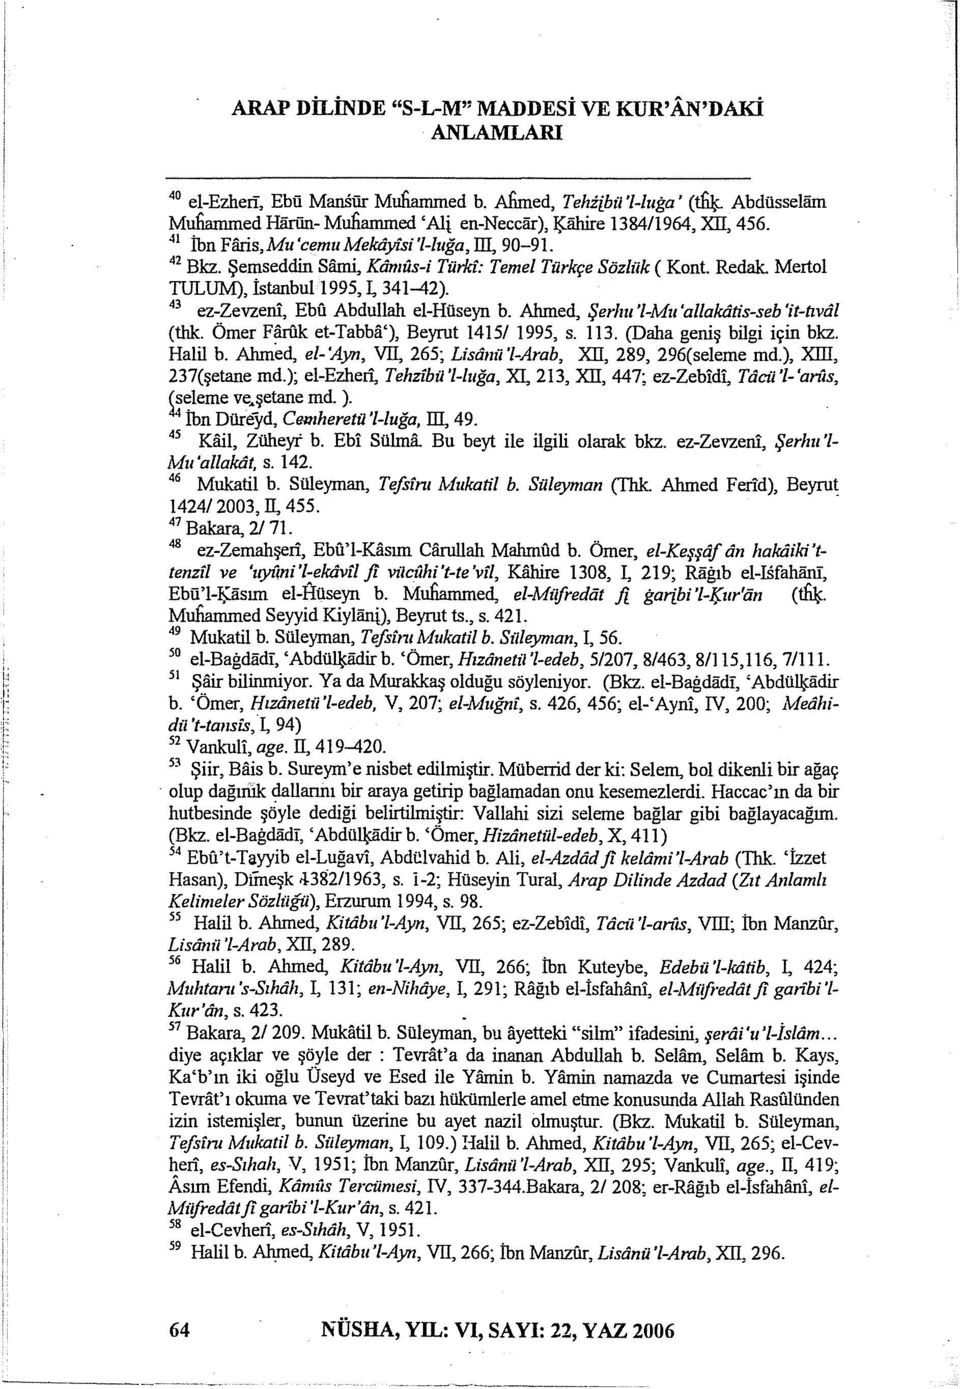 Mertol TULUM), istanbul1995, L 341-42). 43 ez-zevzeni, Ebu Abdullah el-hüseyn b. Ahmed, Şerlııı '1-Mu'allakdtis-seb 'it-tıvdl (thk. Ömer Faruk et-tabba'), Beyrut 1415/ 1995, s. 113.